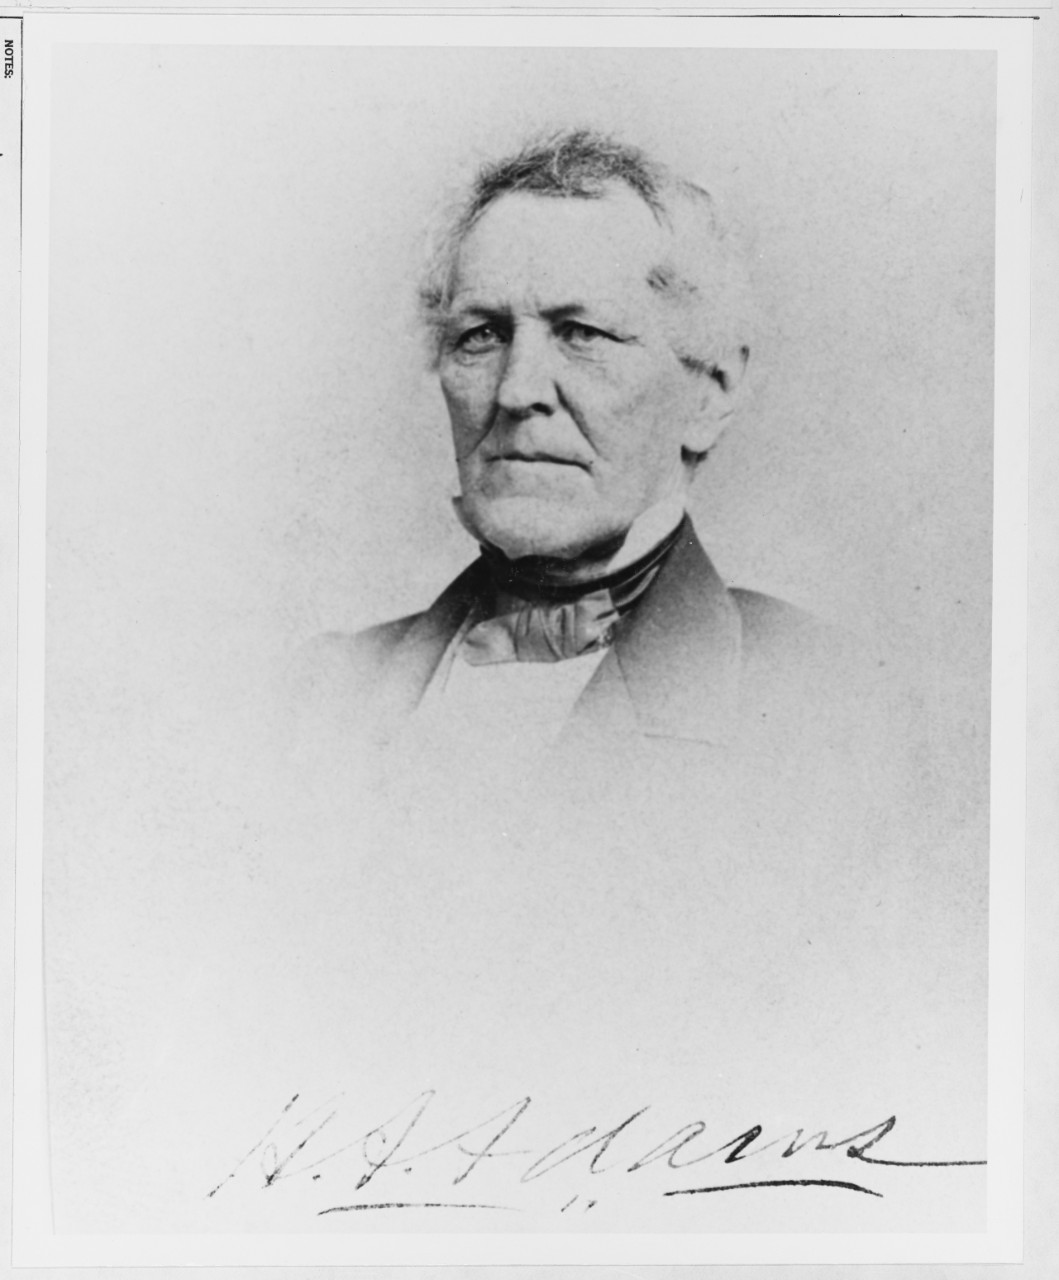 Commodore Henry A. Adams, USN